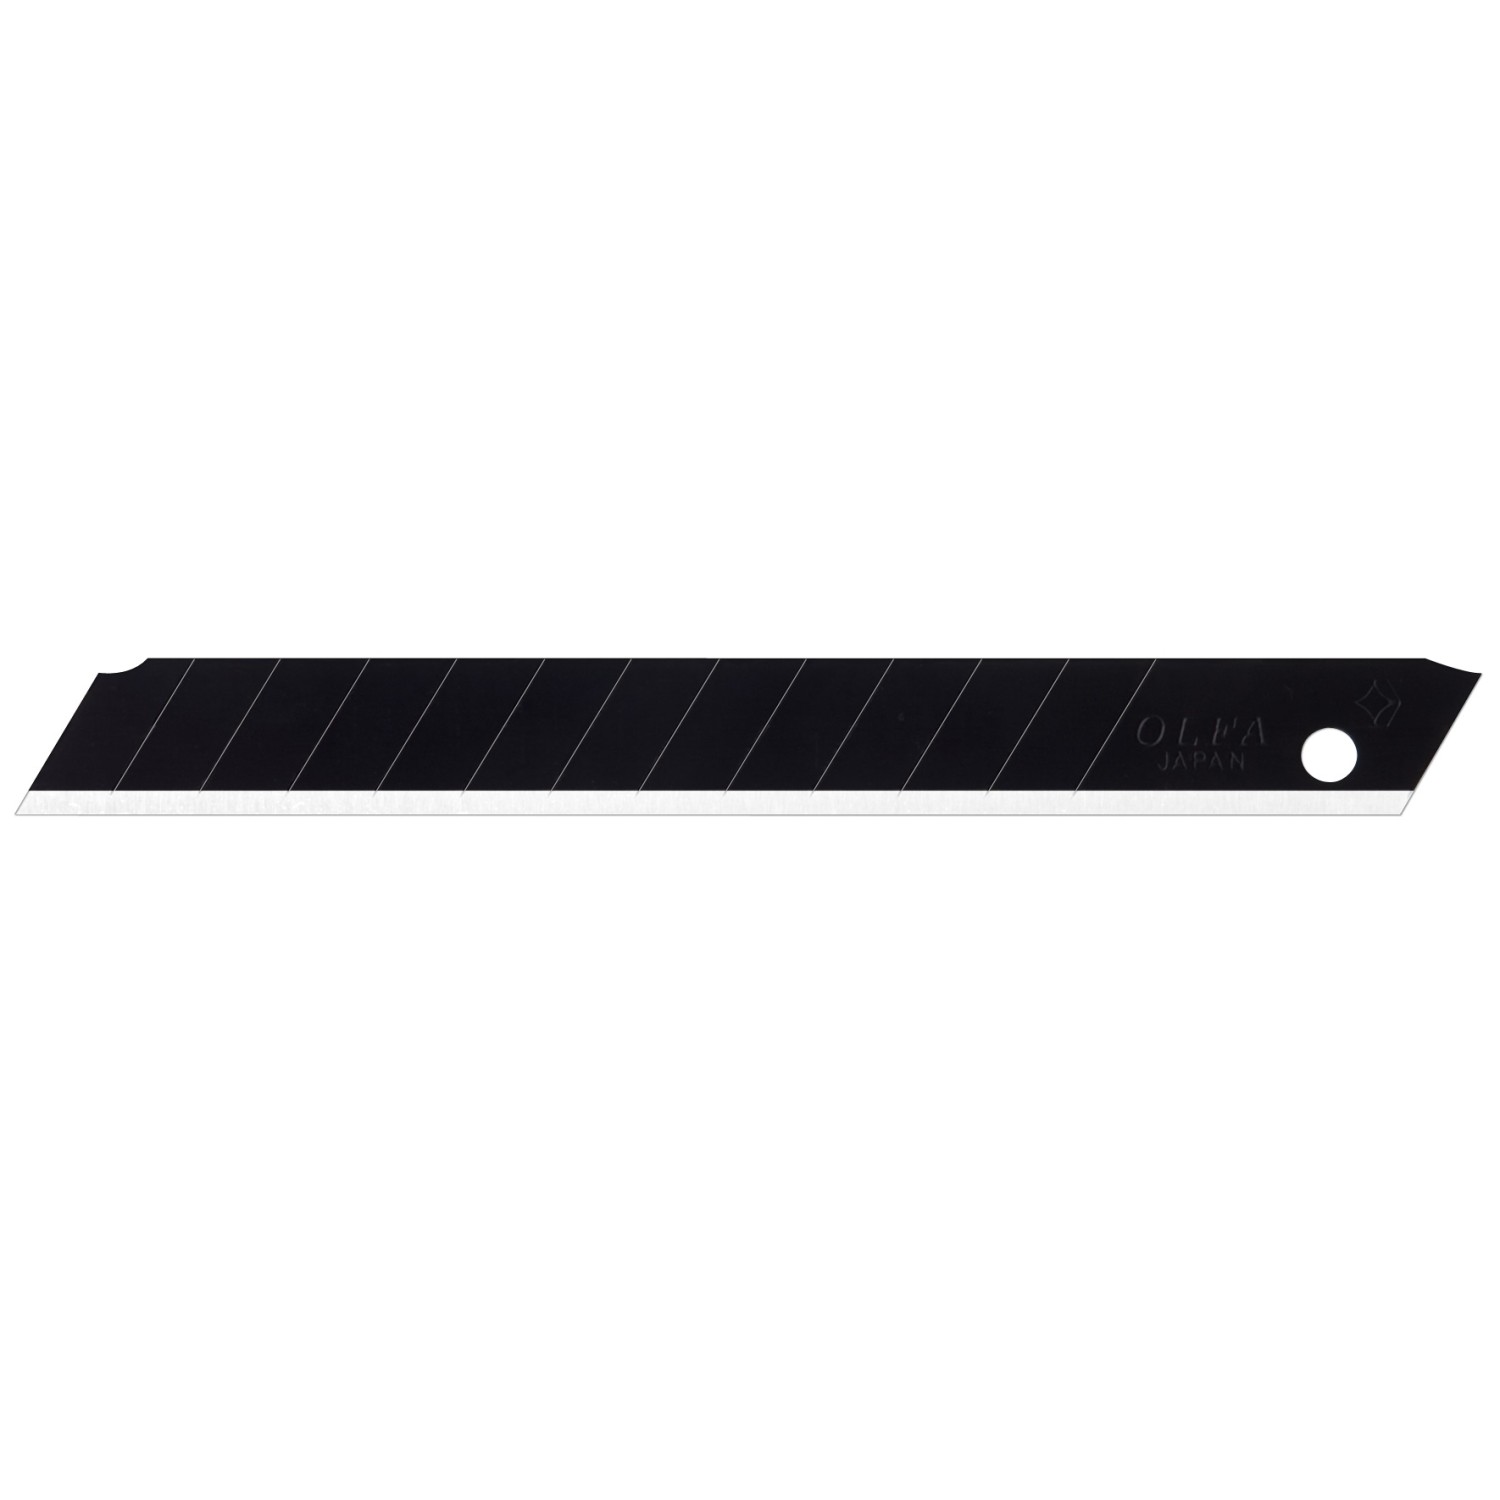 OLFA 9149 Abb-50b 9mm UltraSharp Black Snap-off 50 Blades for sale online 